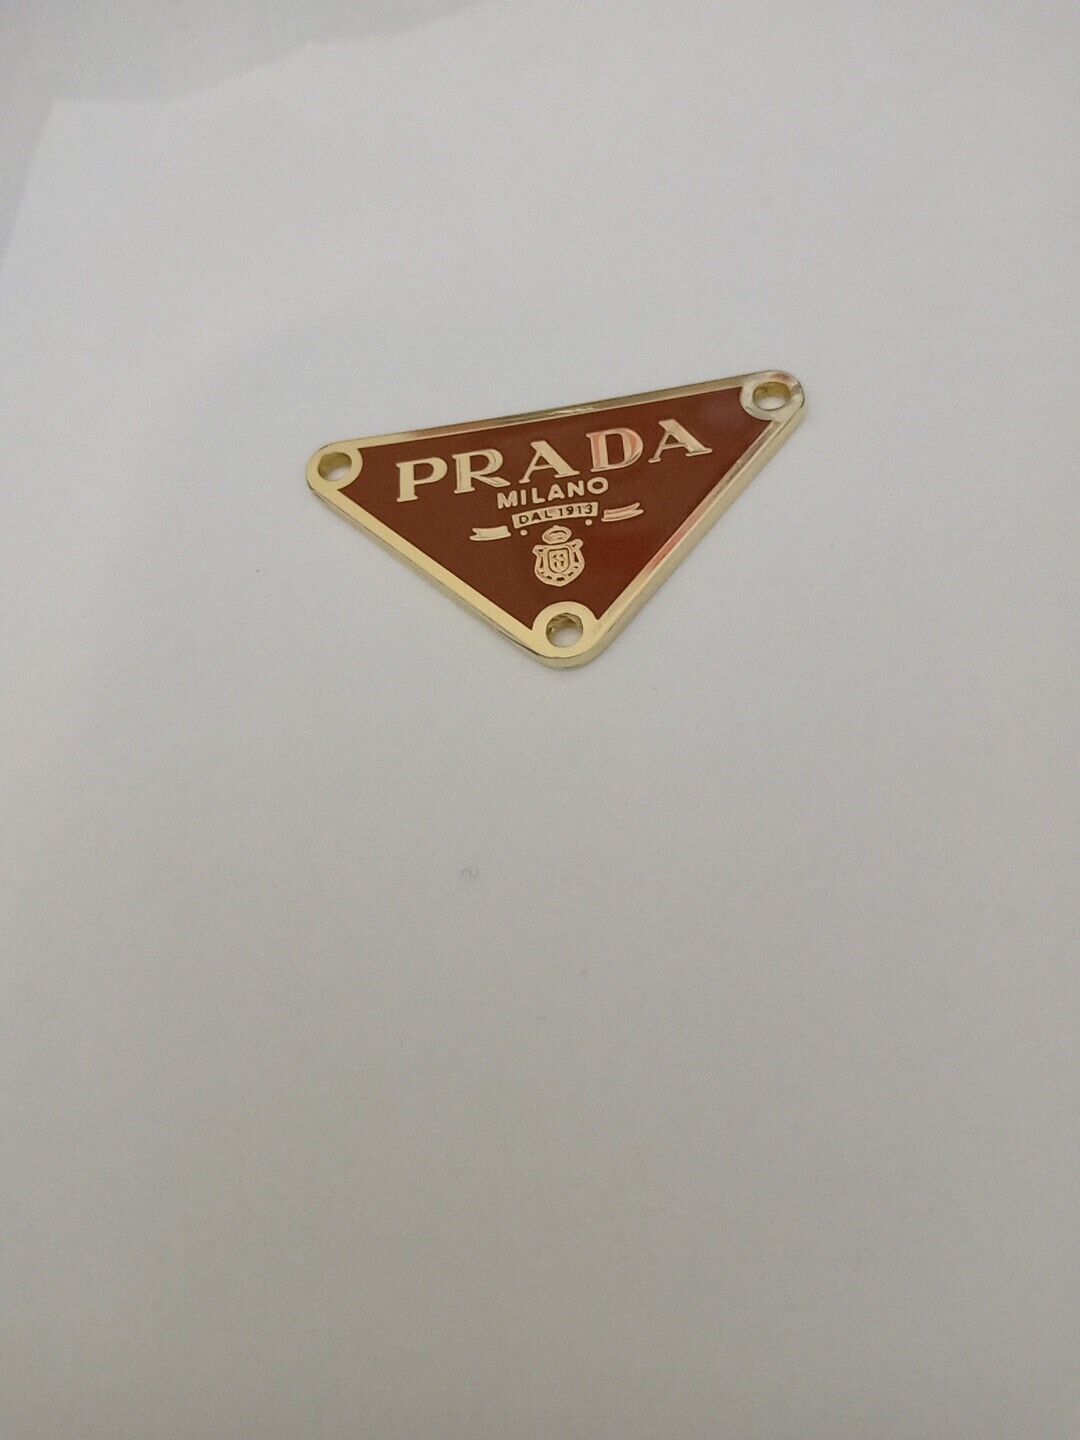 One Brown38mm Prada Logo Triangle with trim  gold tone Button  Zipperpull